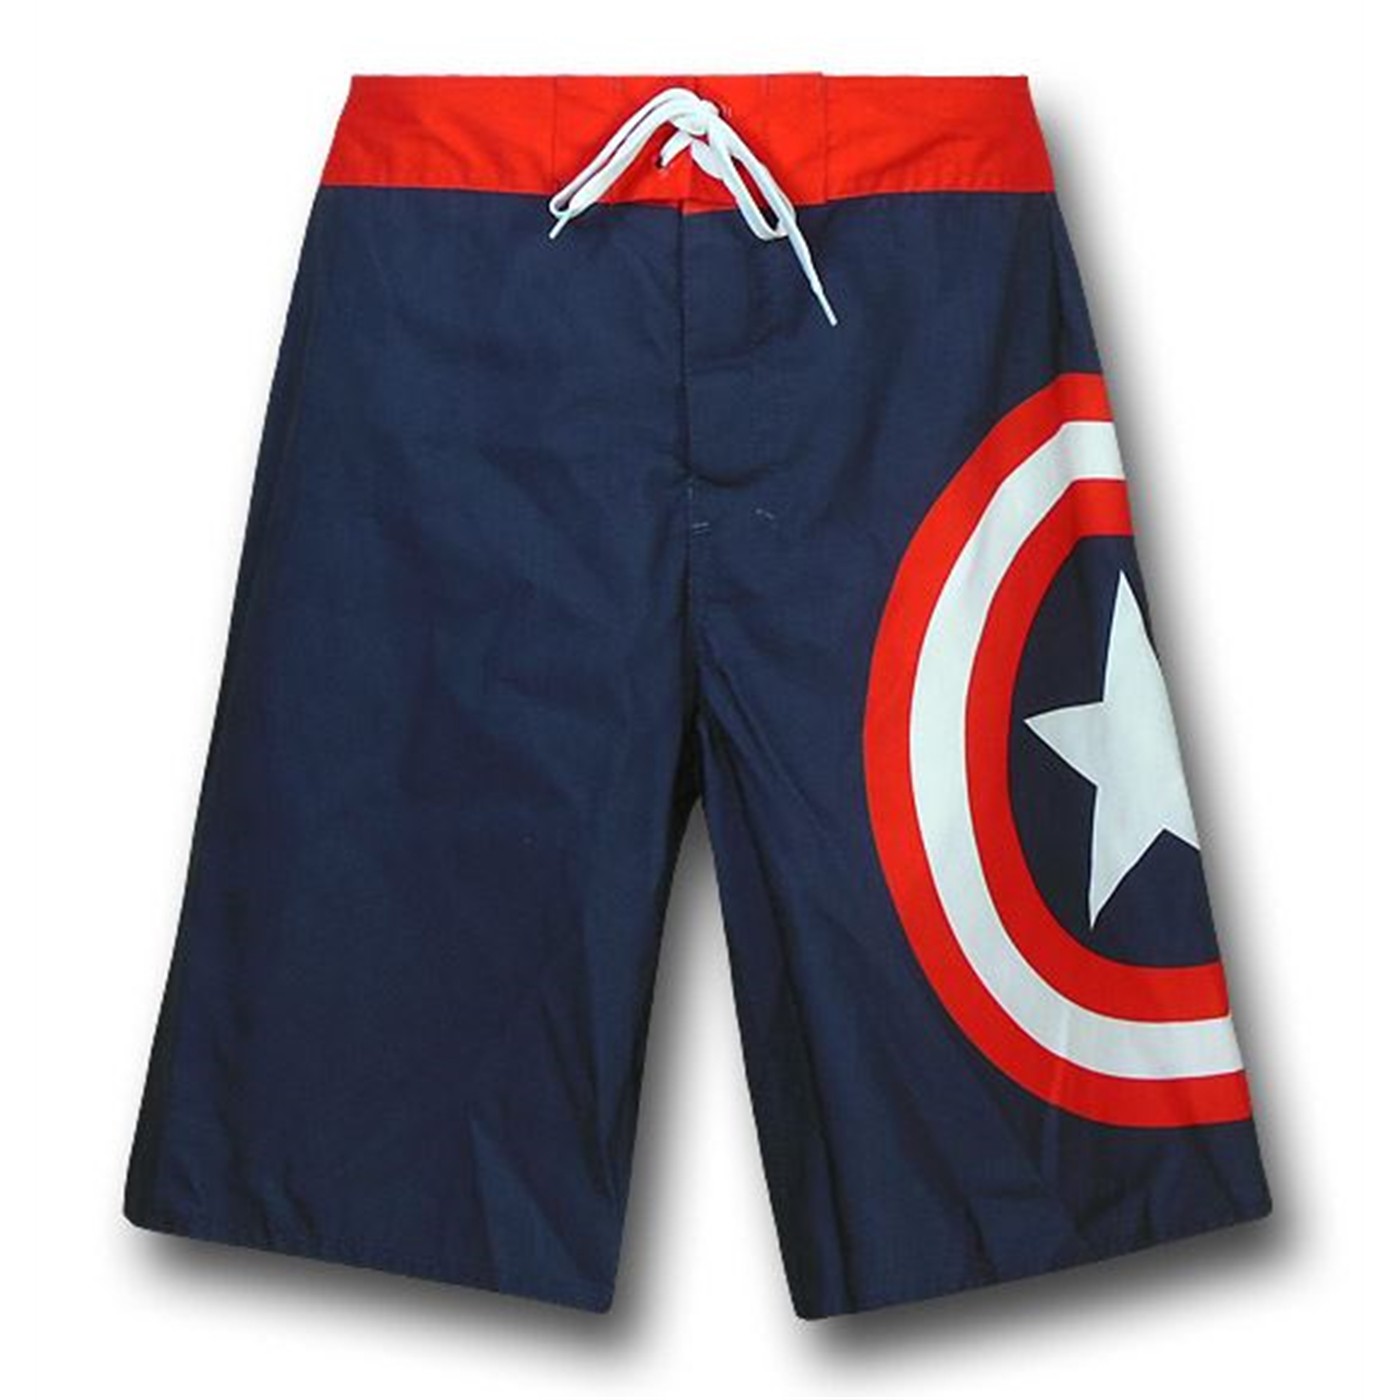 Captain America Shield Navy Board Shorts